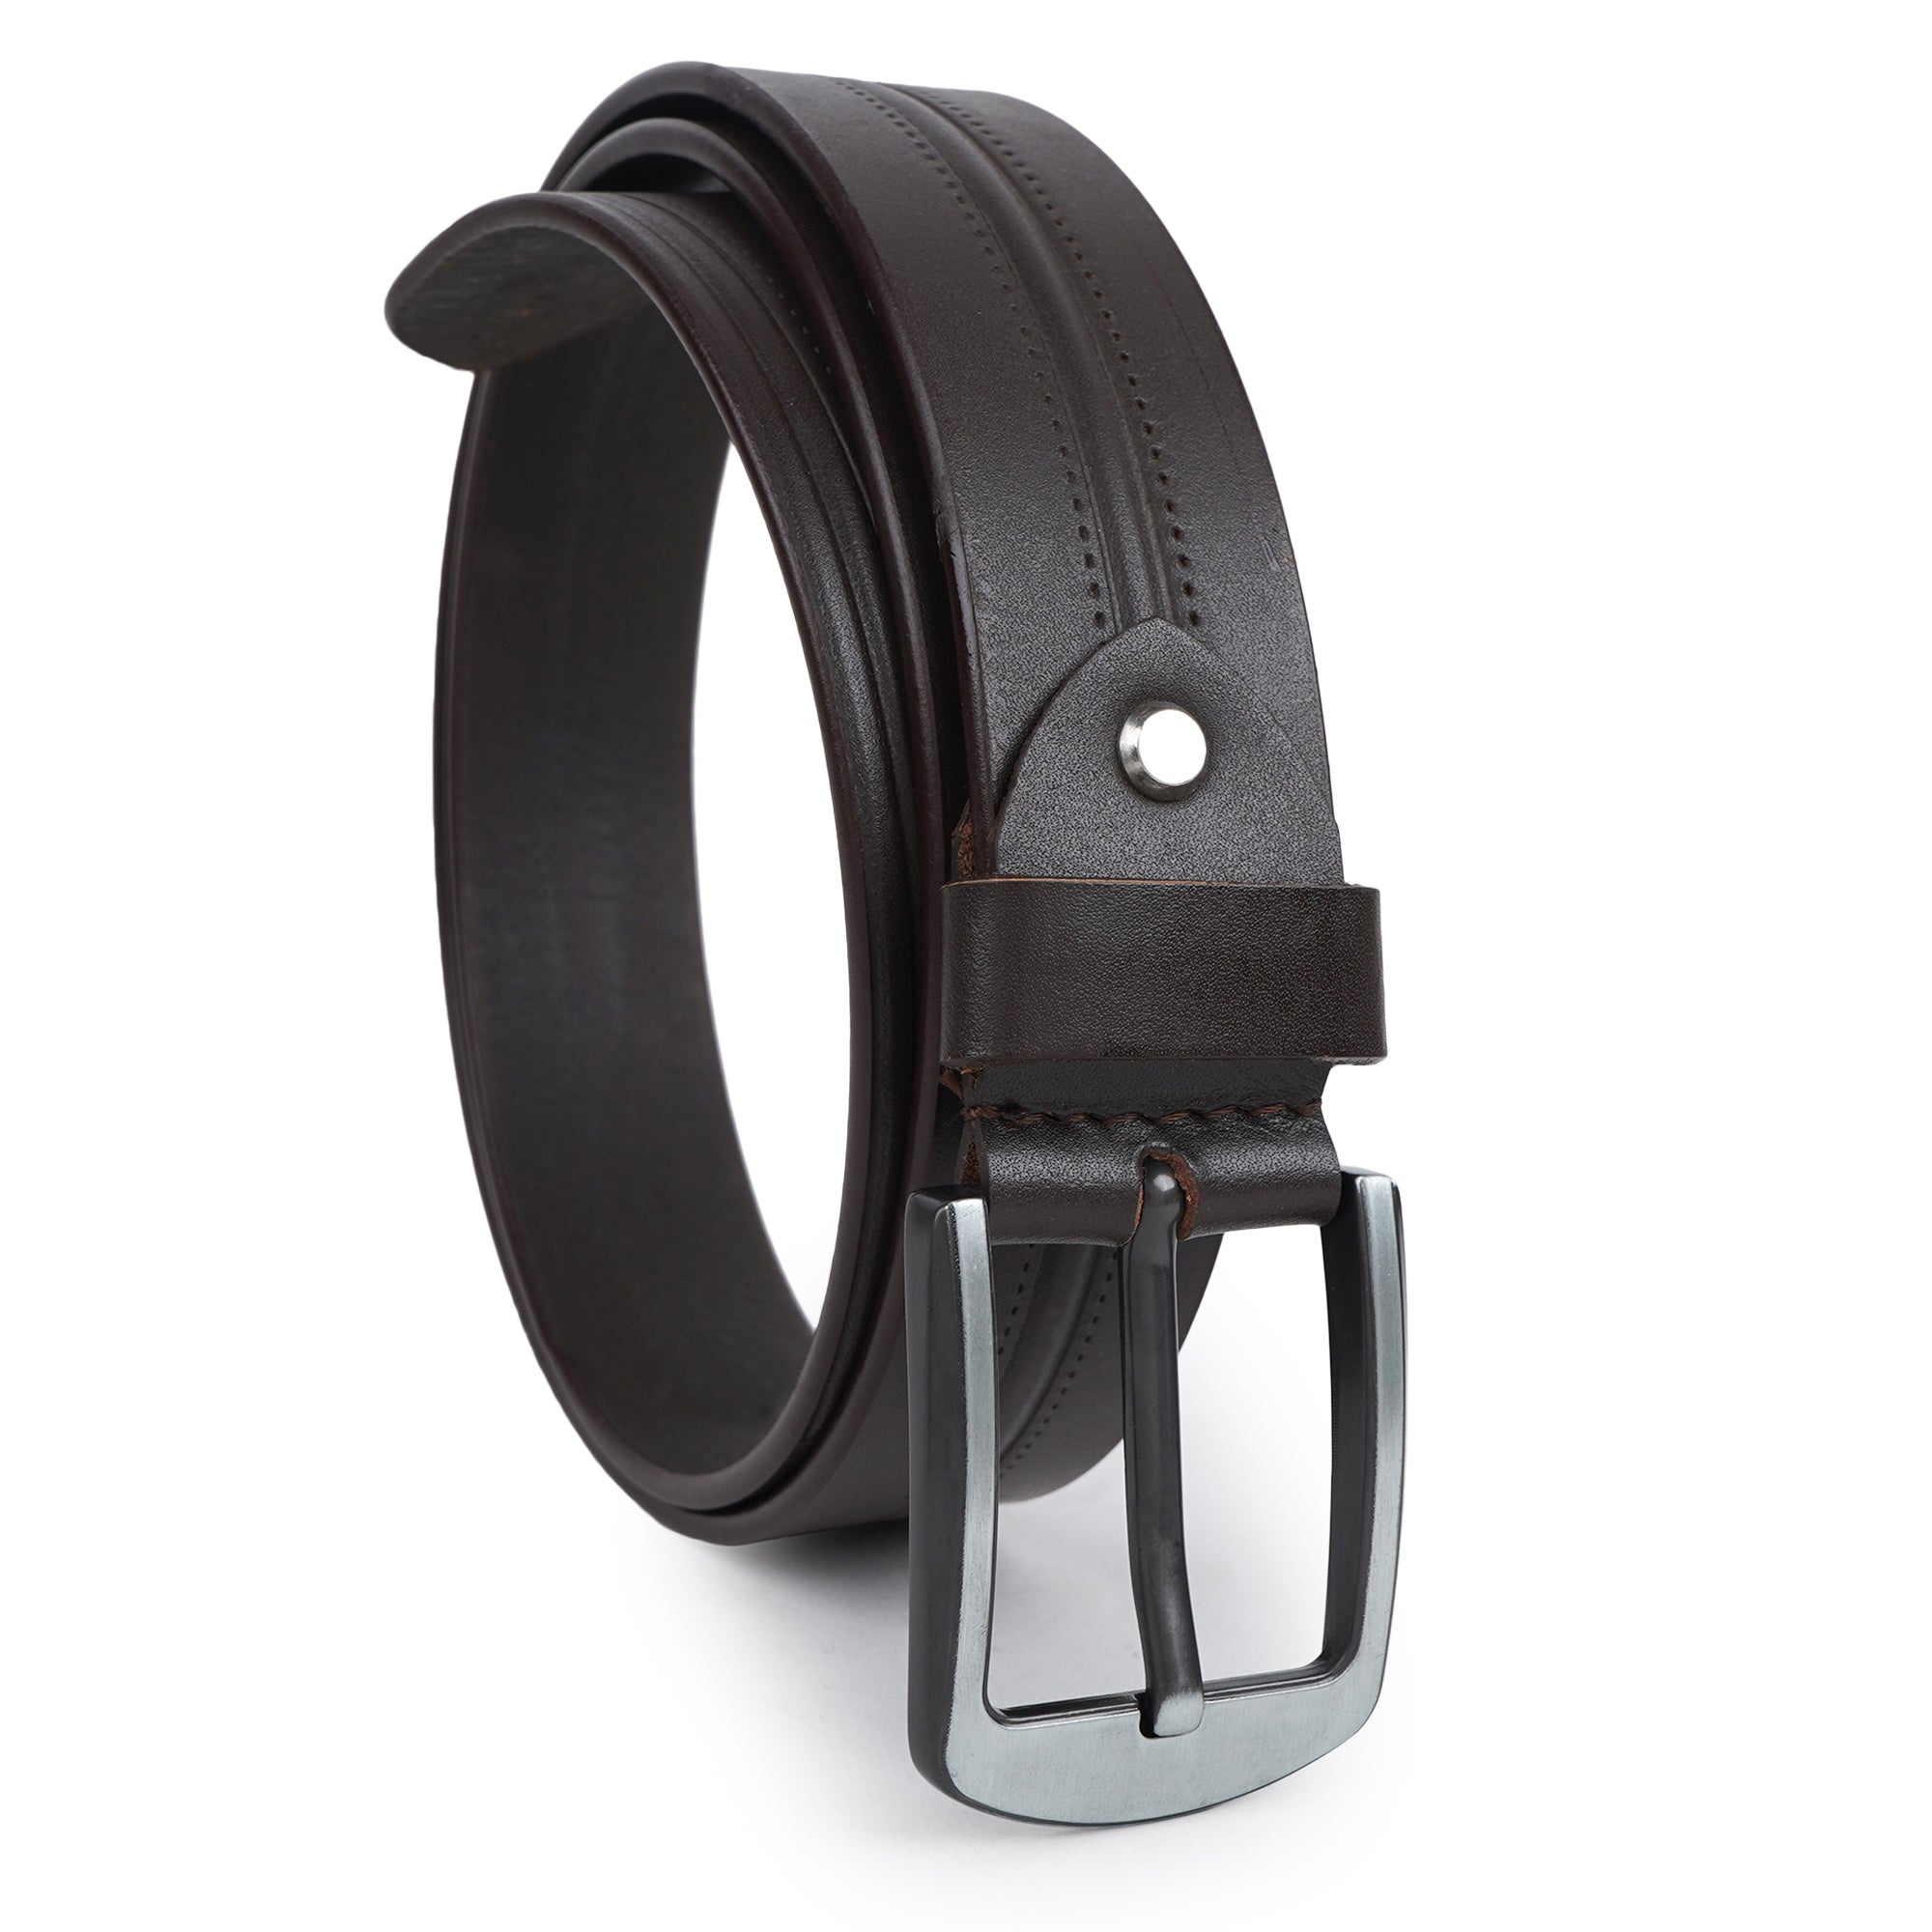 CIMONI Genuine Leather Men's Belt A Perfect Blend of Casual Wear - Metal Buckle Belts ( 1 Year Gurantee)